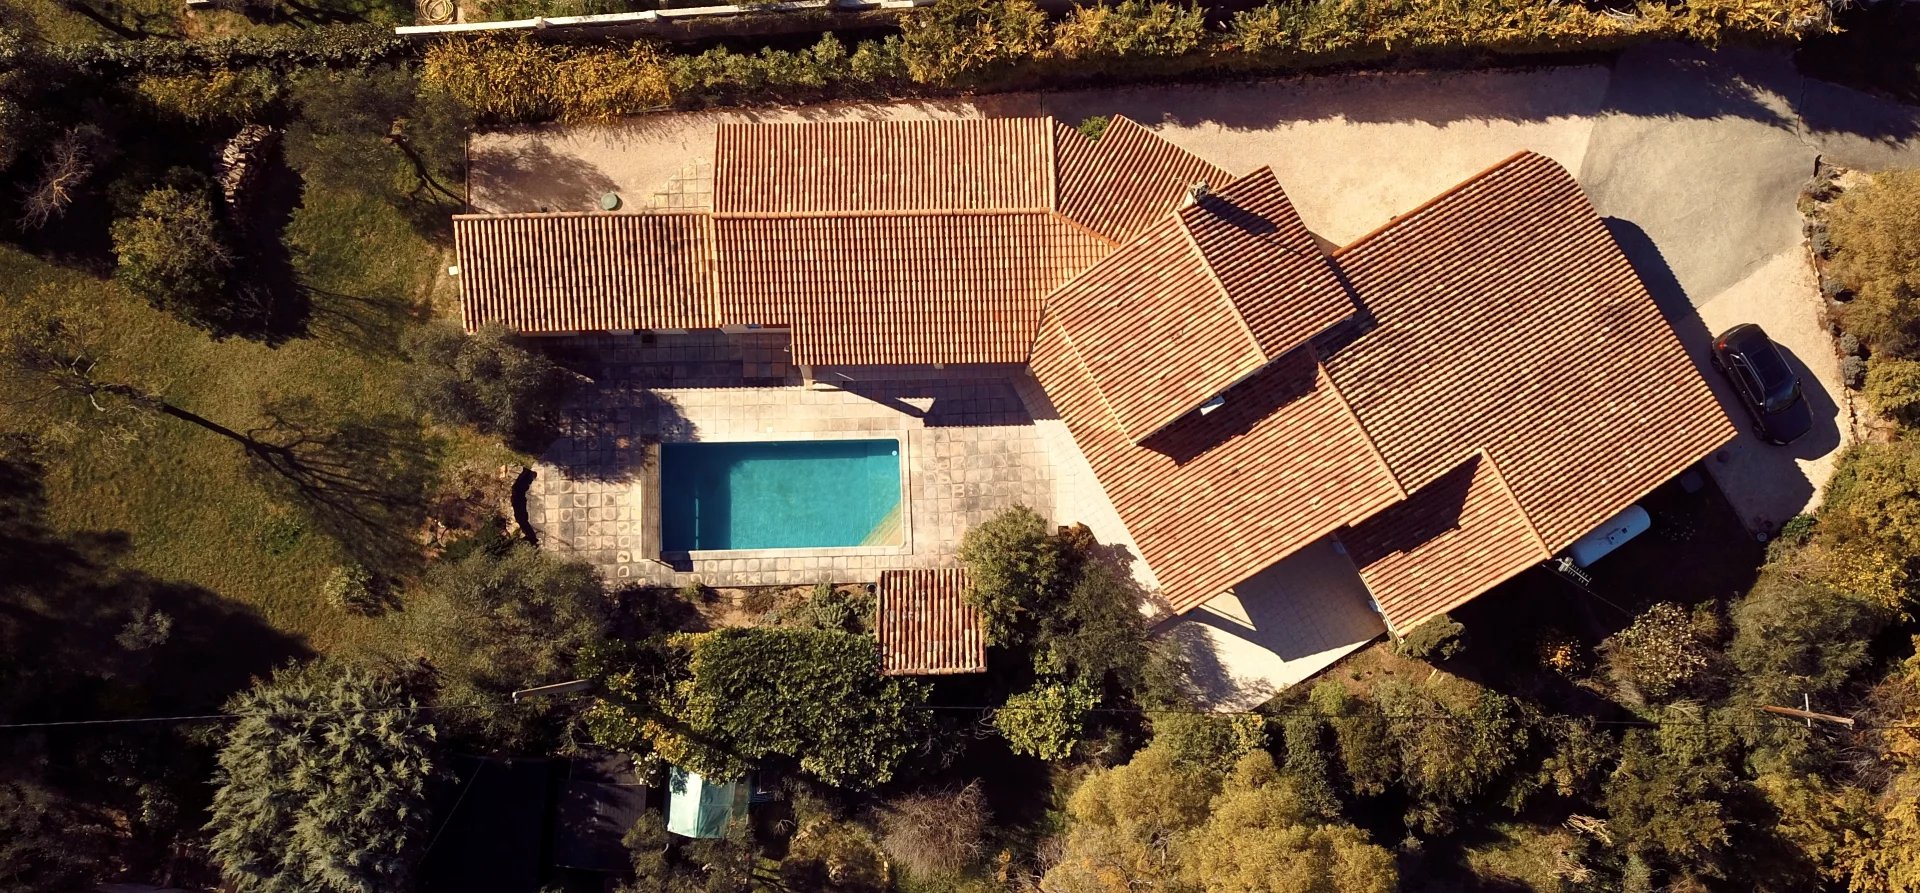 Le Val, 335 m2 villa on a 6300 m2 plot of land